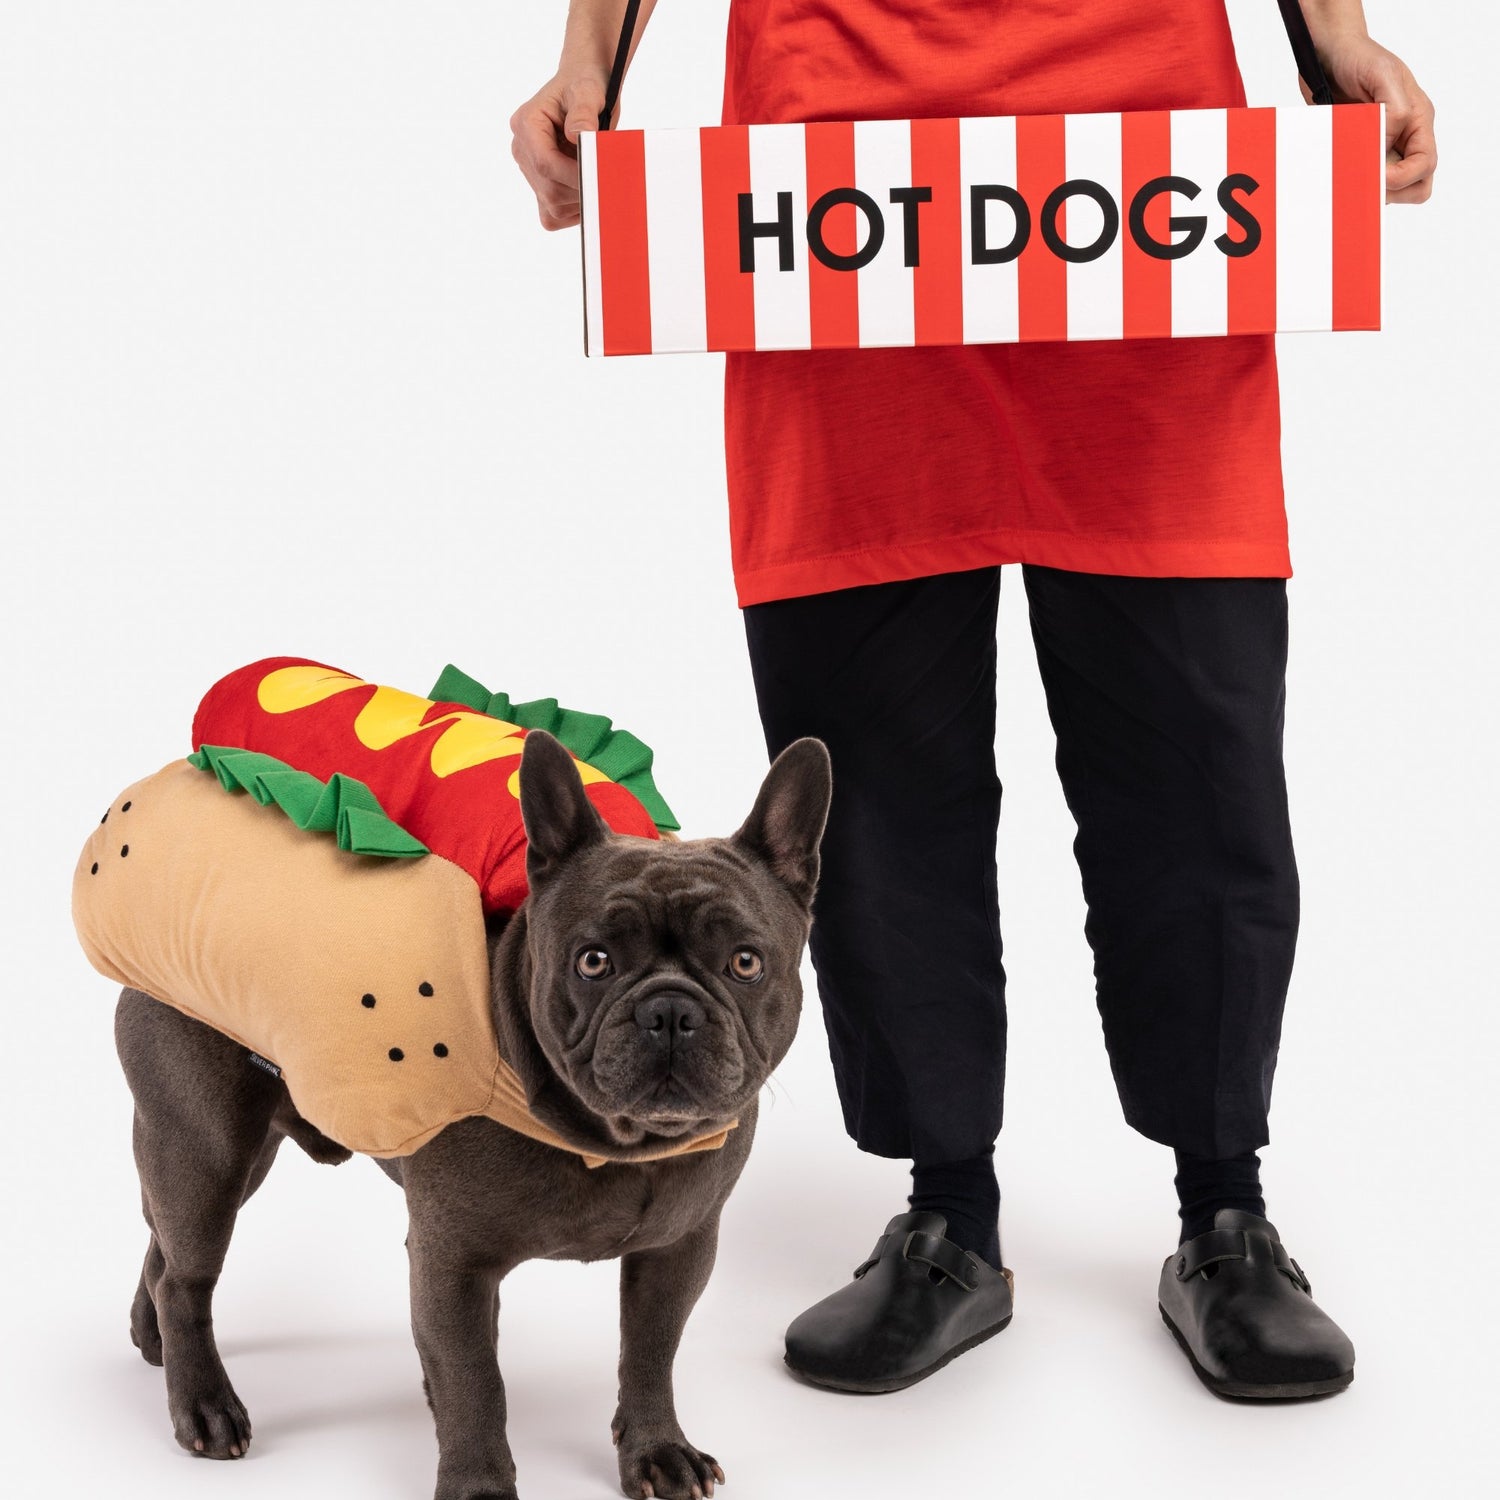 Hotdog Vendor - Matching Human Costume - Silver Paw